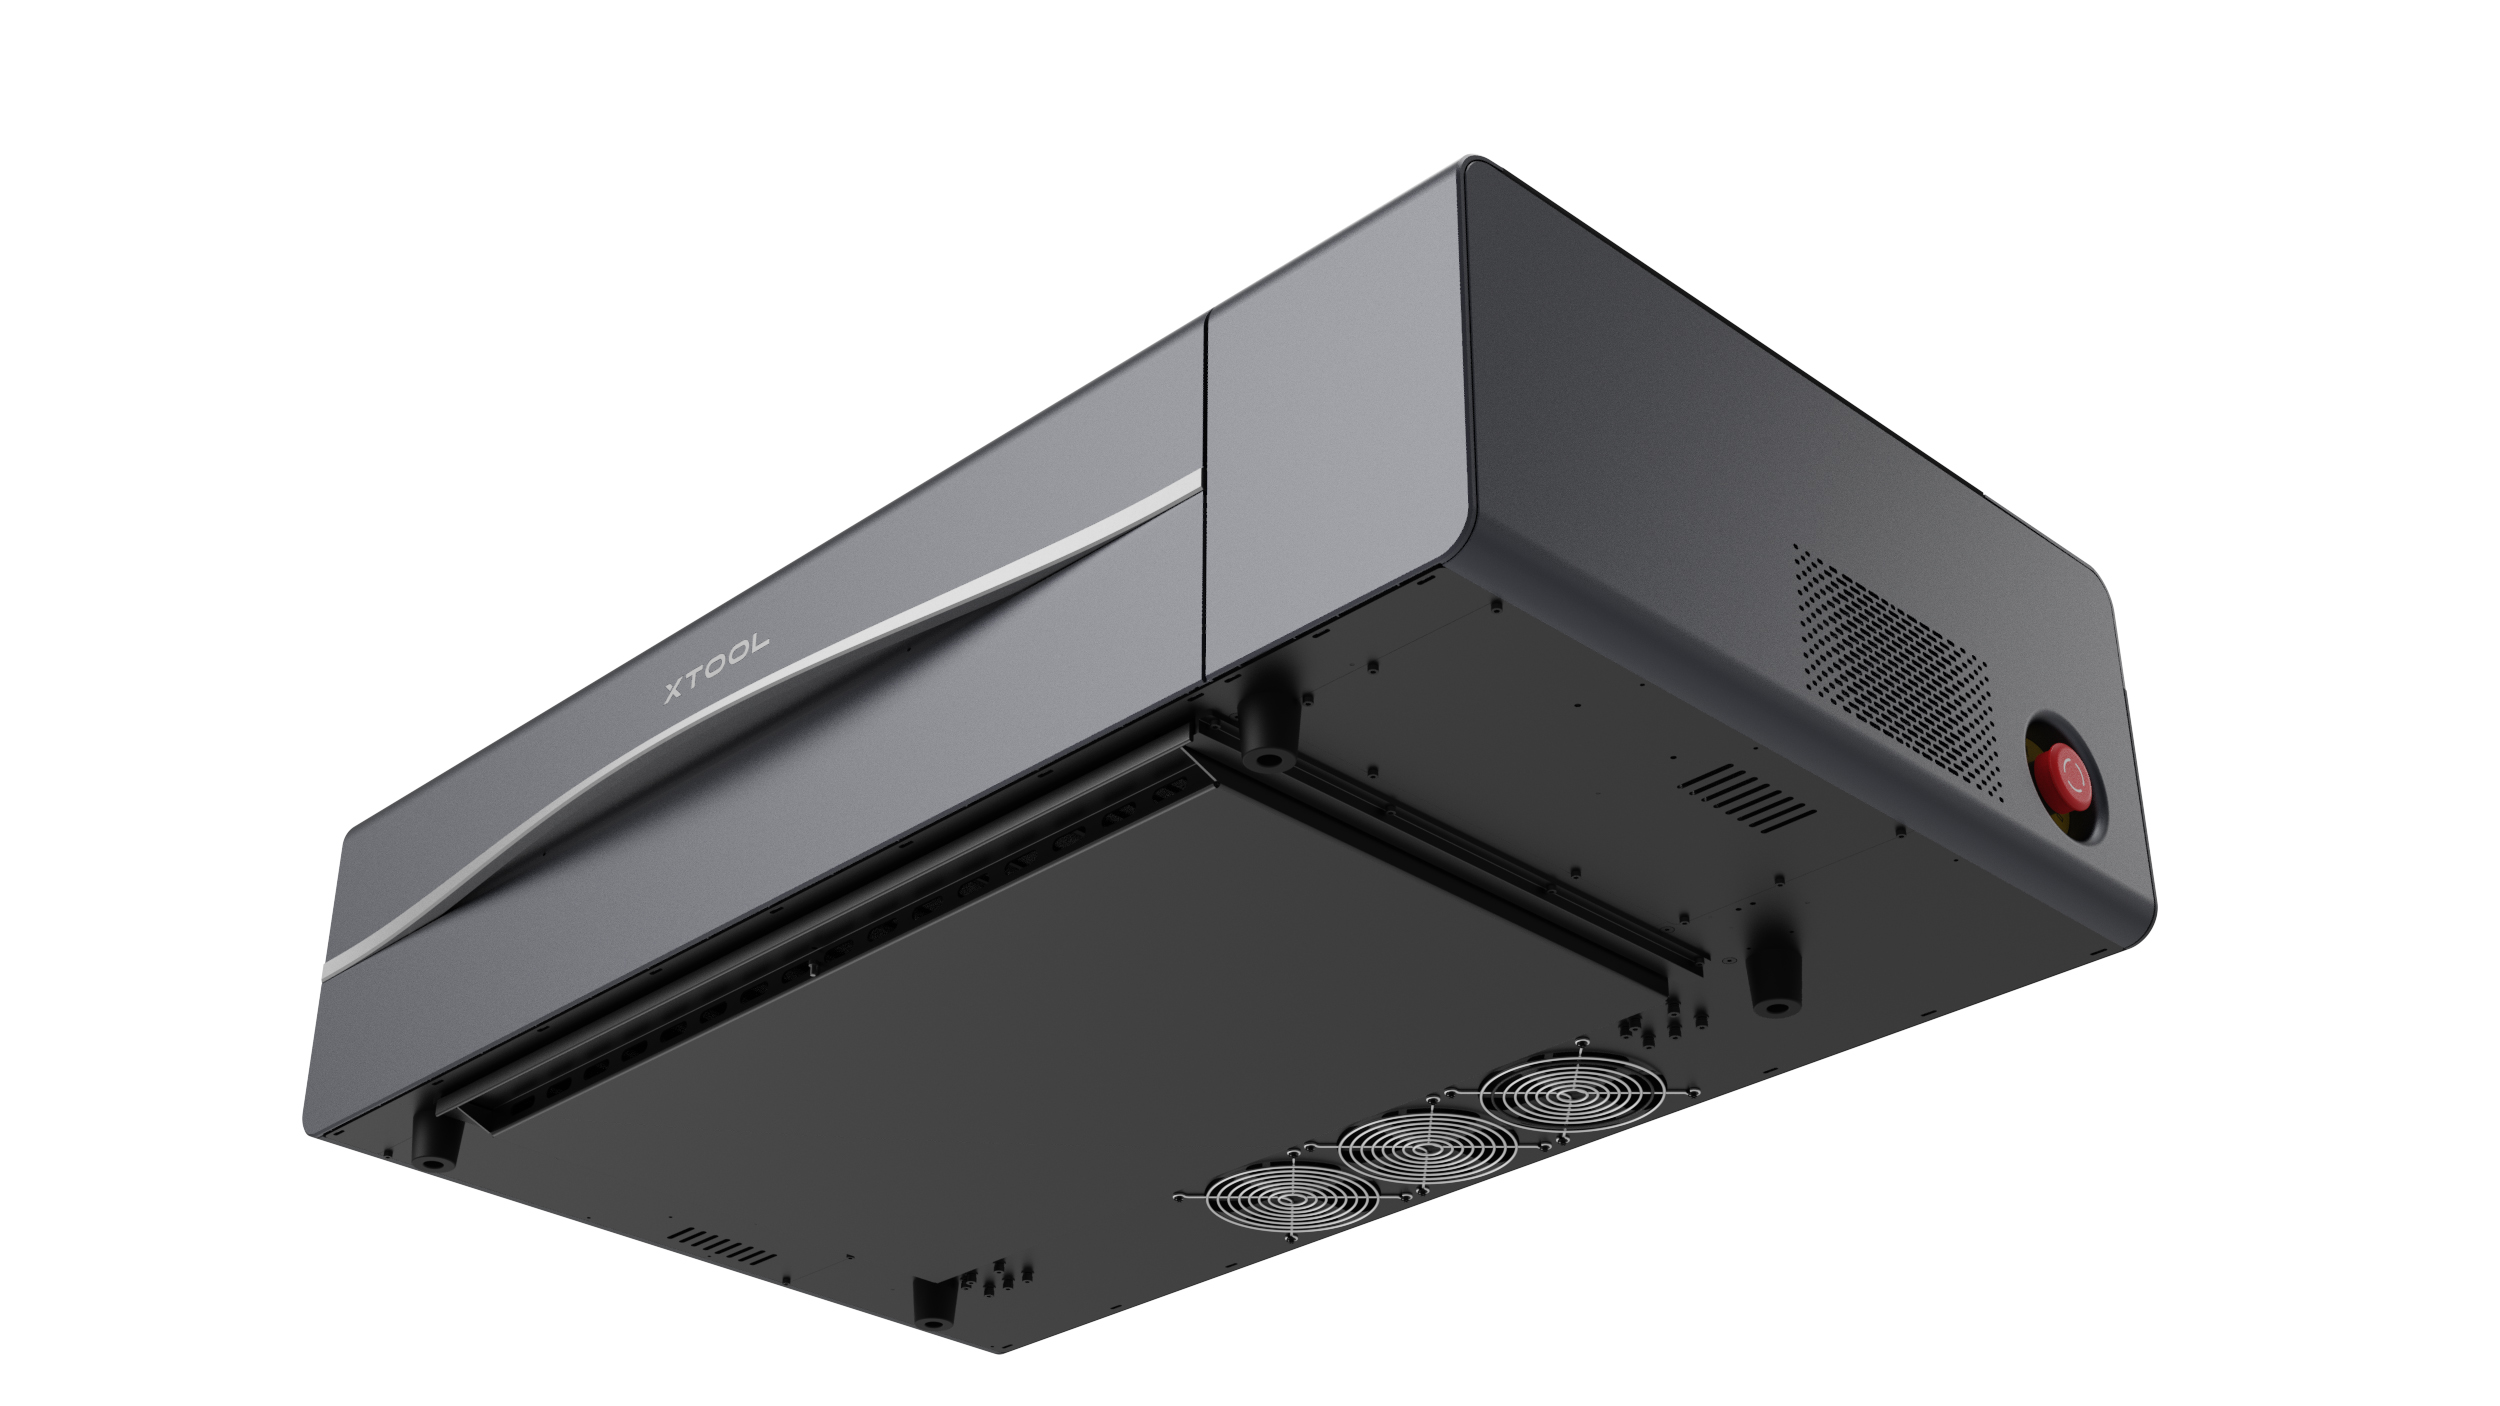 xTool P2-Versatile and Smart Desktop 55W CO2 Laser